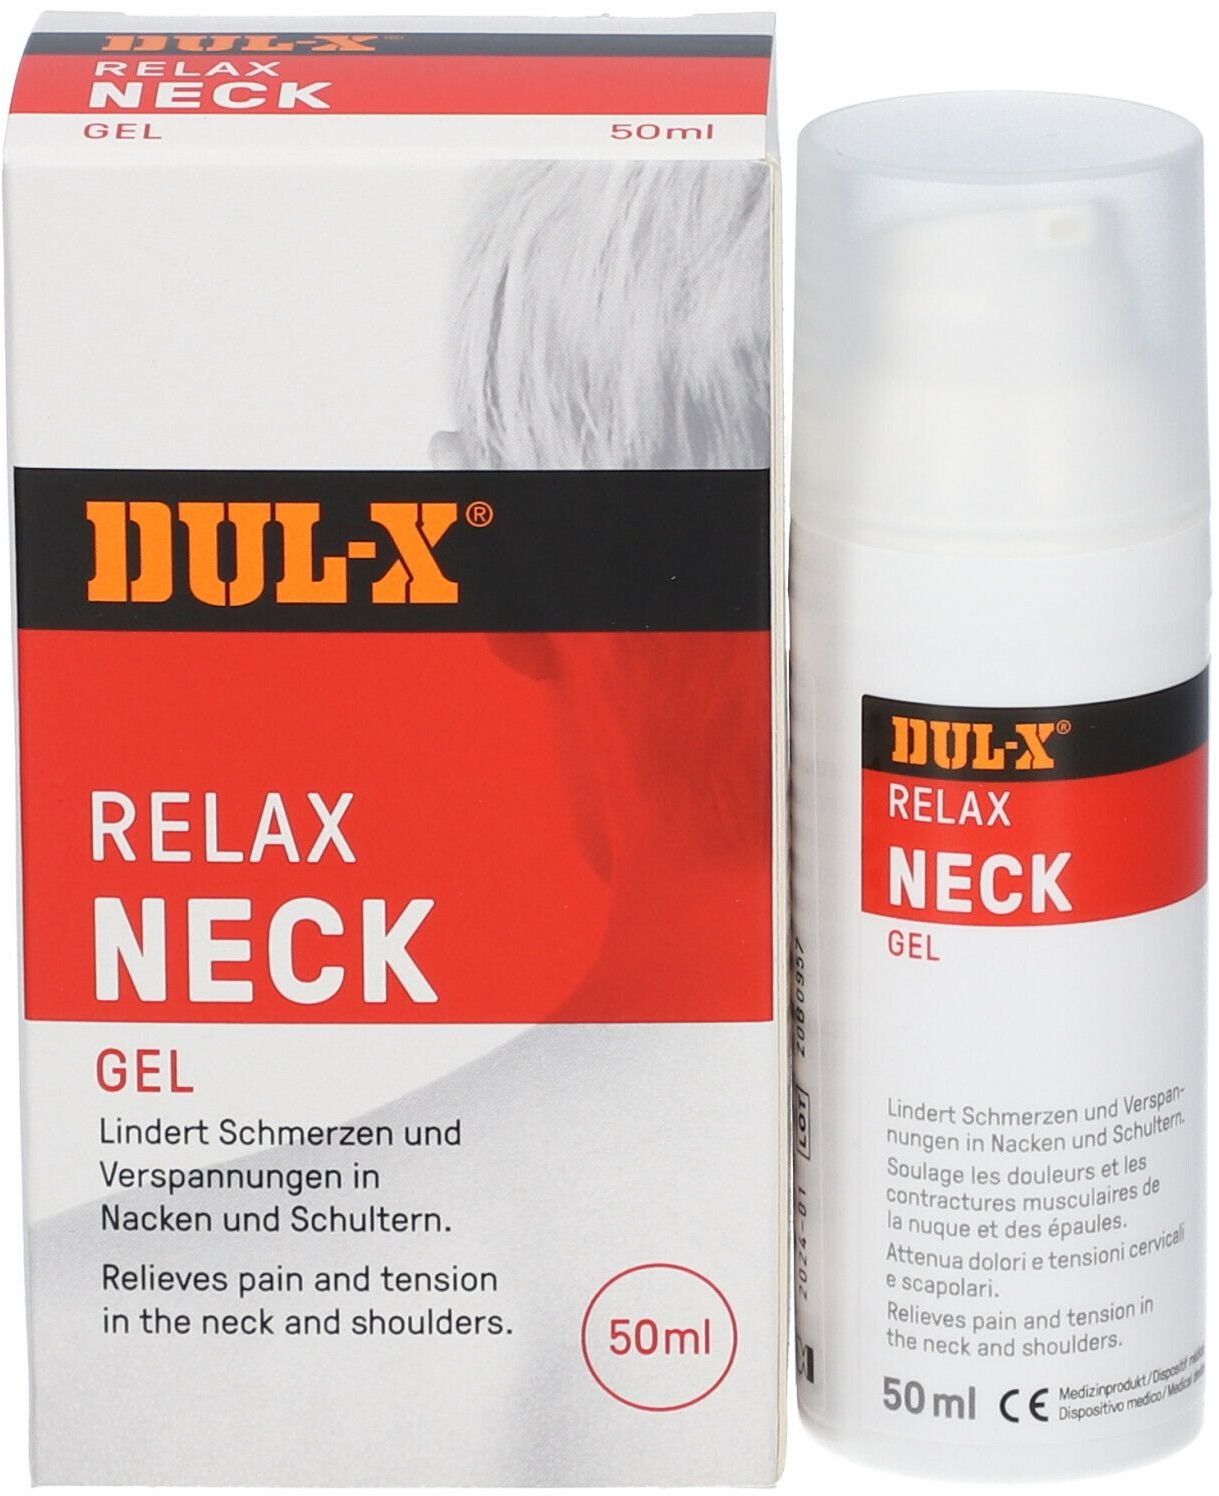 DUL-X Relax Neck Gel 50 ml